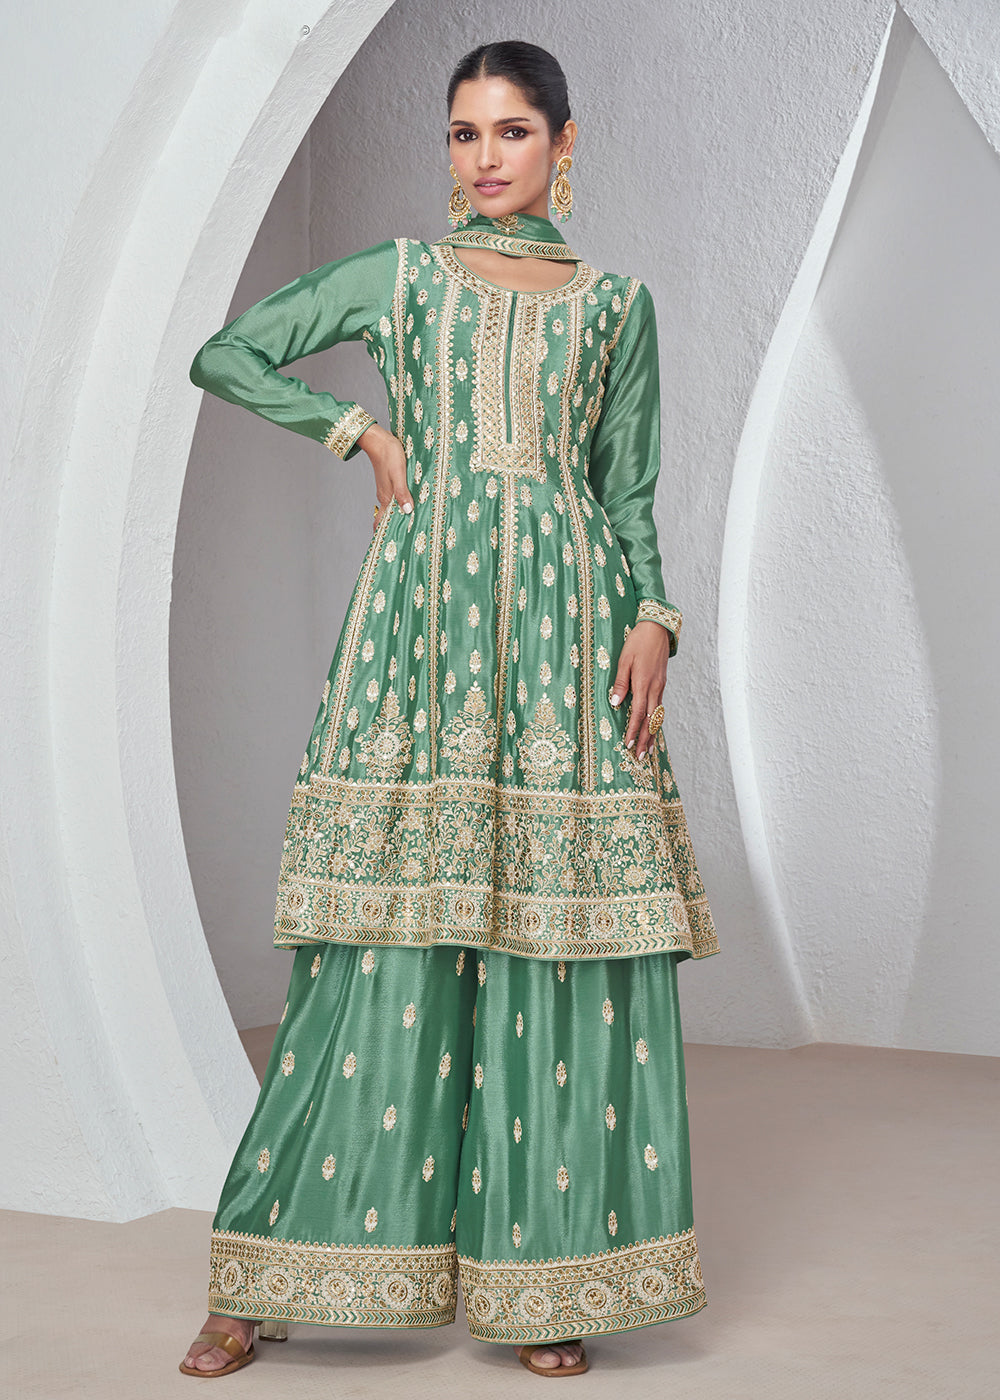 Buy Now Mint Green Chinnon Silk Wedding Festive Palazzo Dress Online in USA, UK, Canada, Germany, Australia & Worldwide at Empress Clothing.